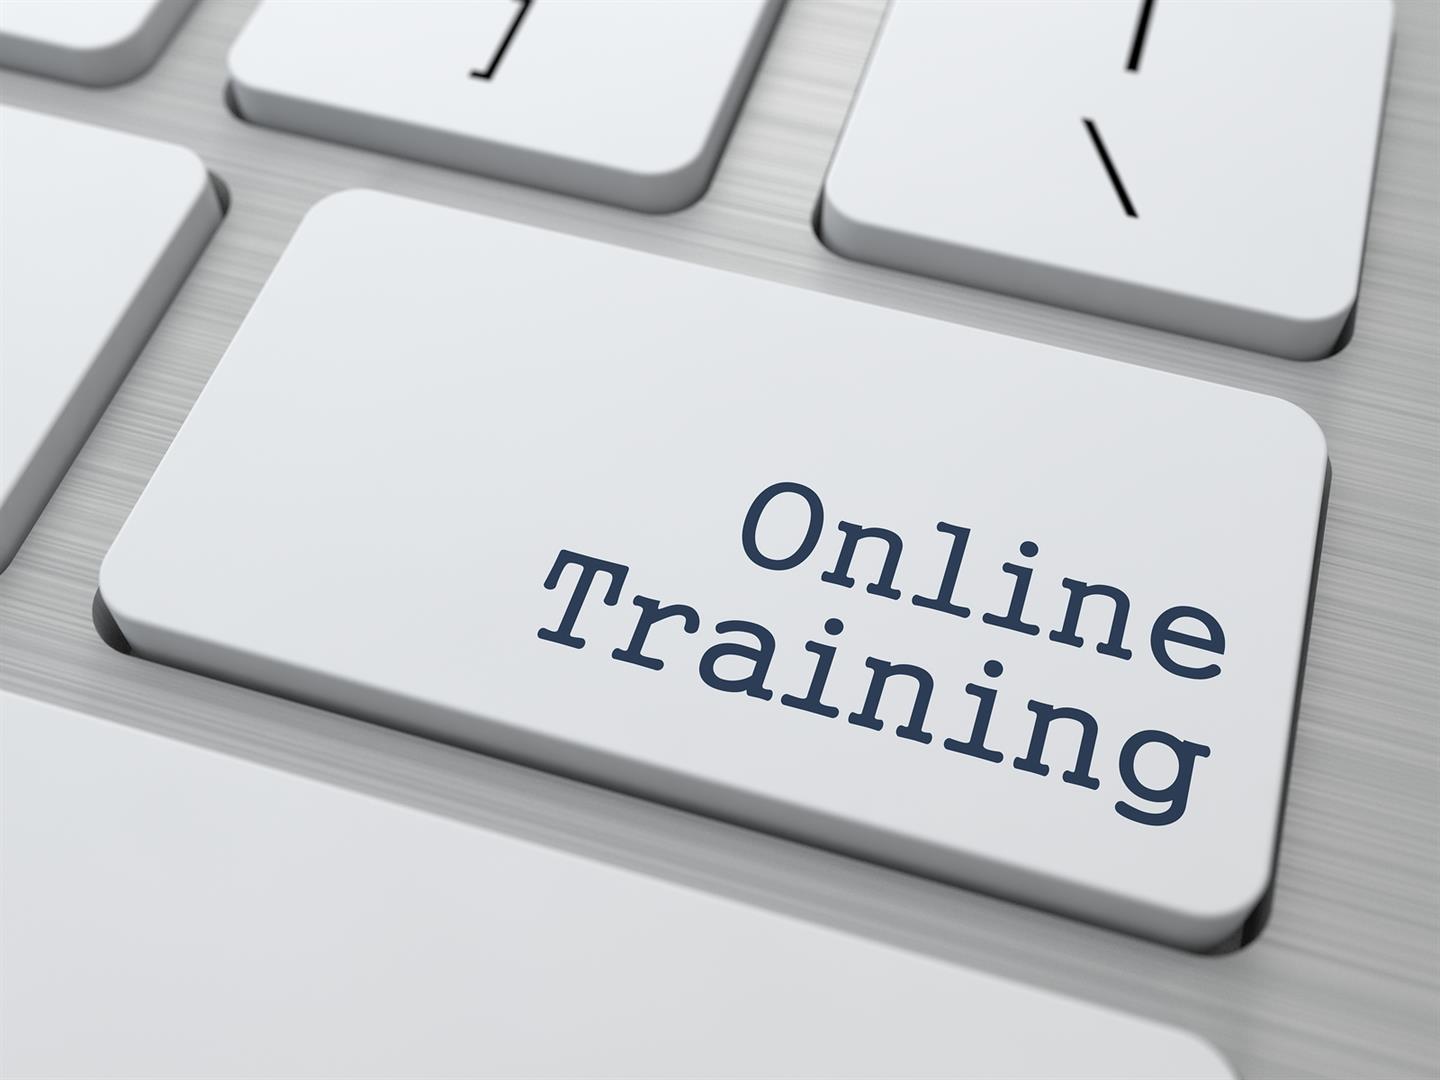 Online Training stock image